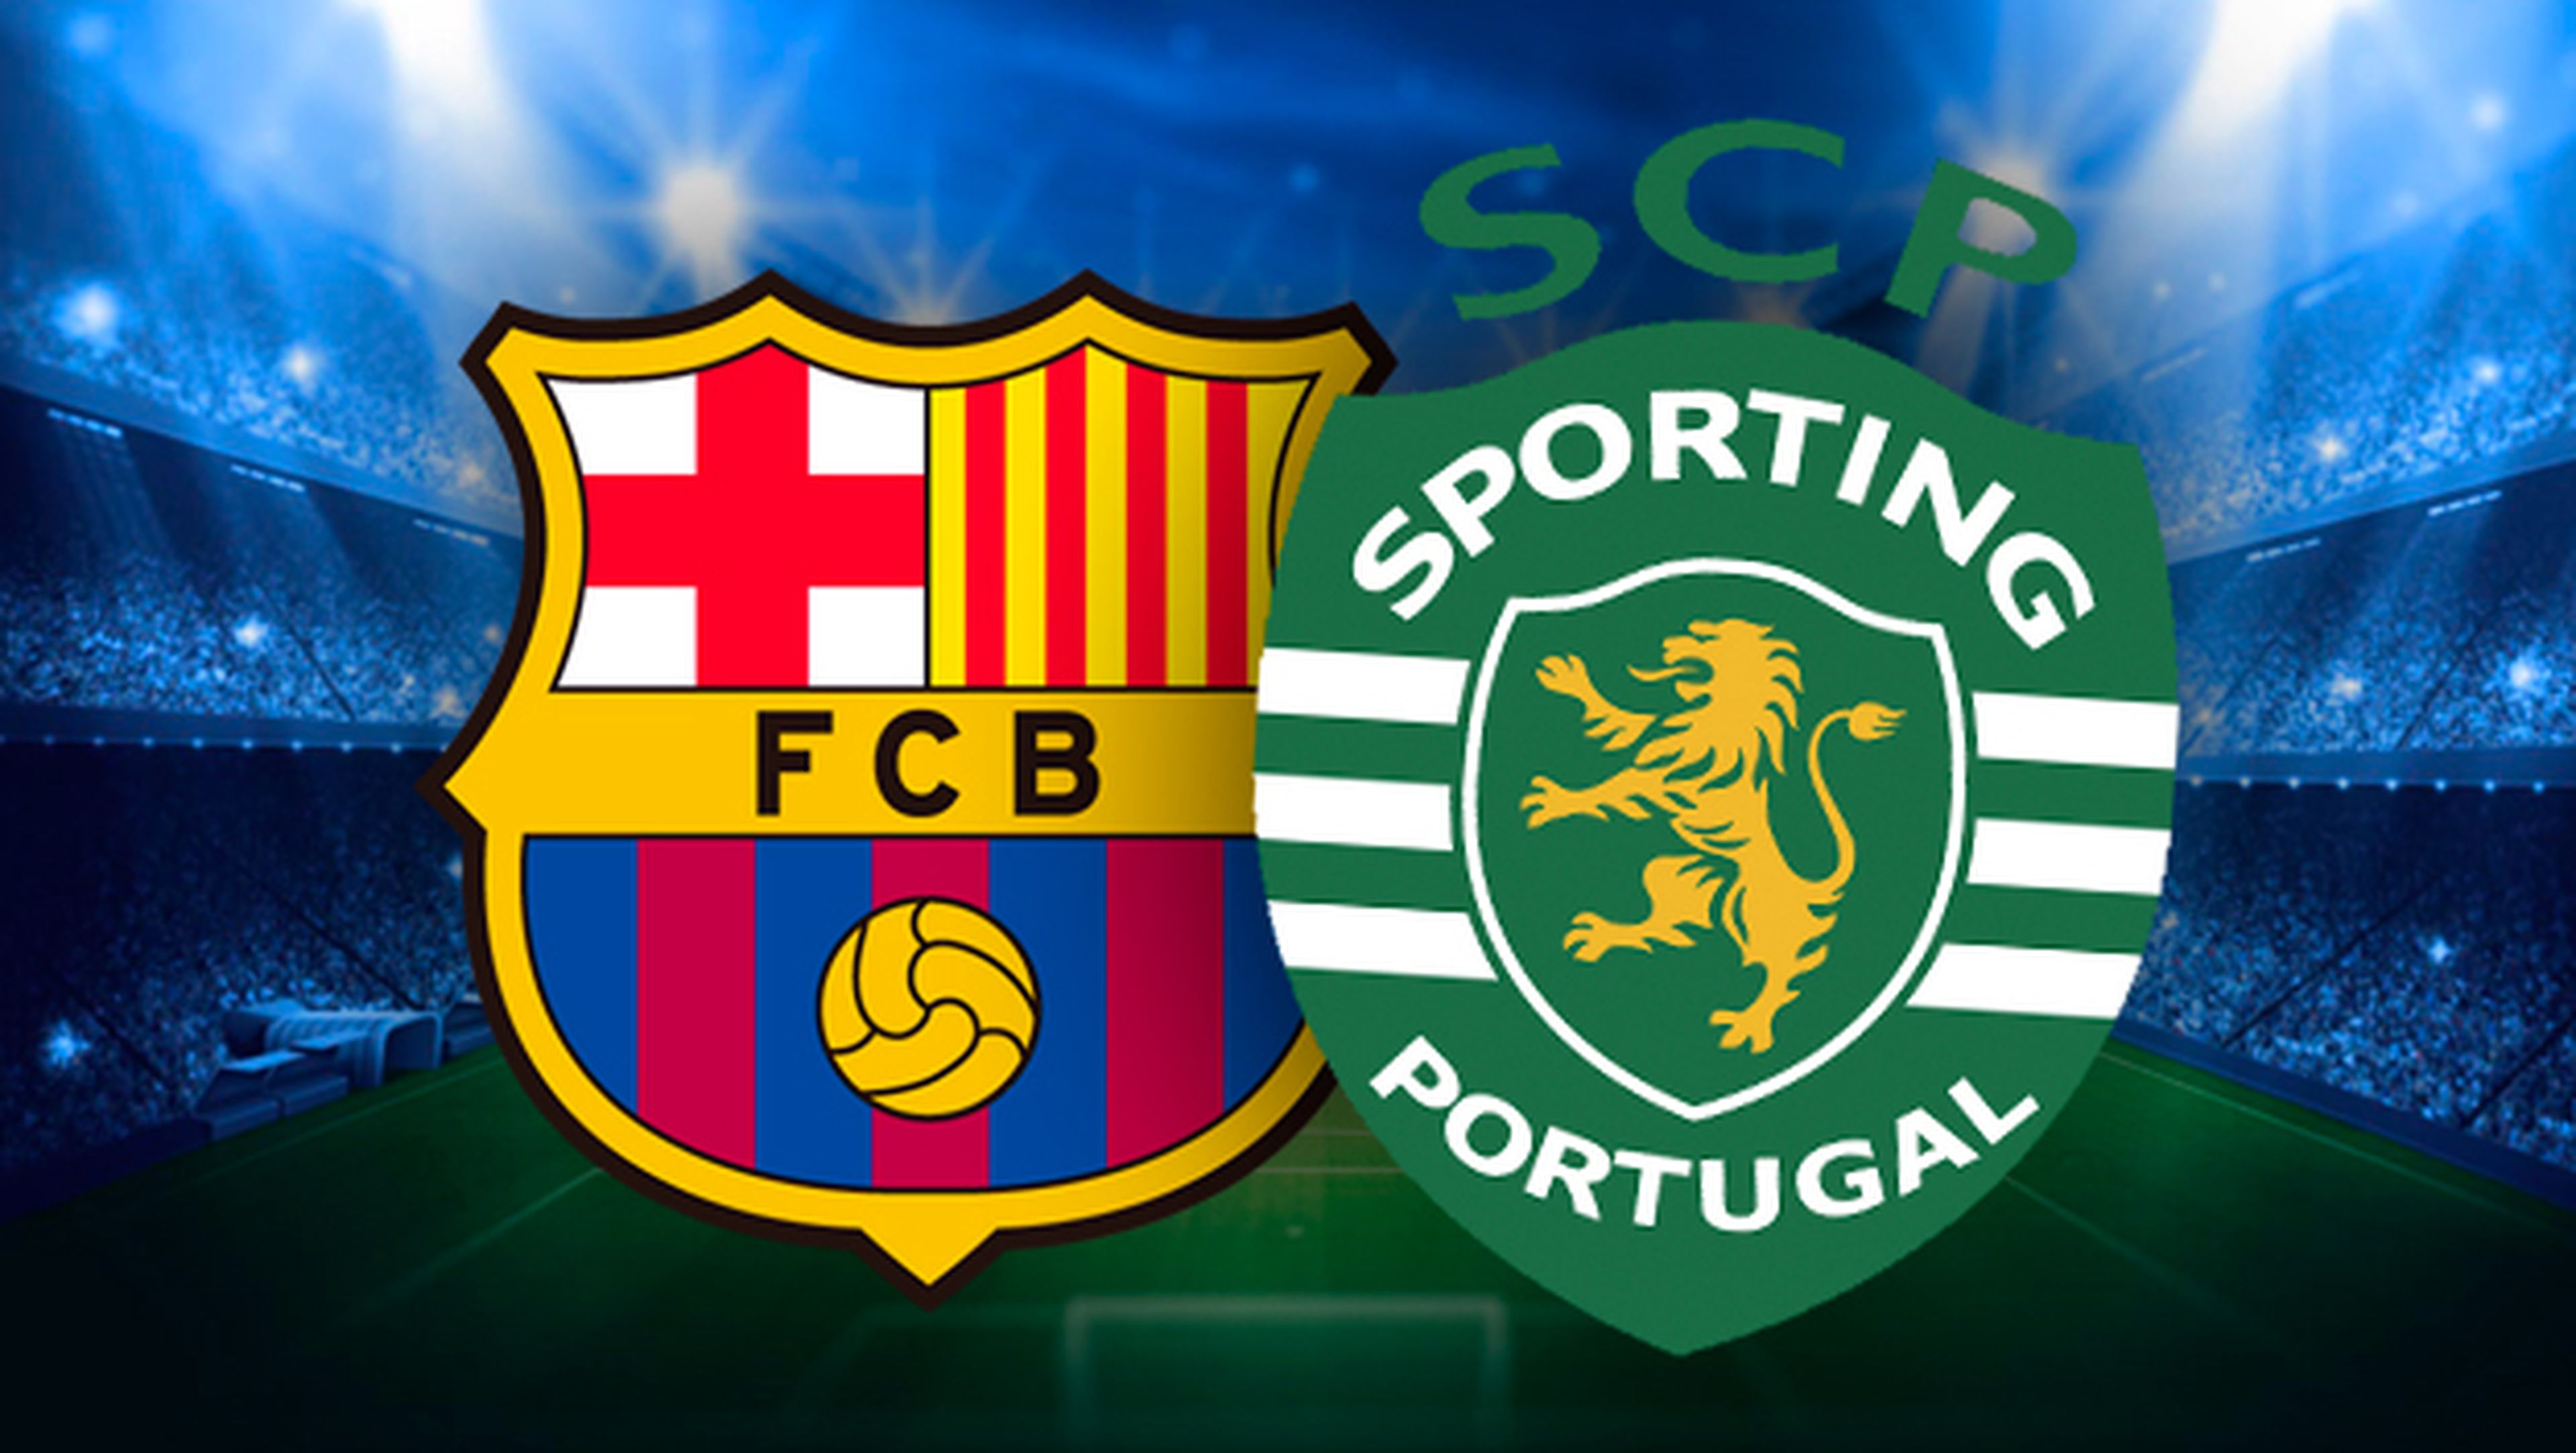 Ver el Barcelona - Sporting de Lisboa en streaming online.